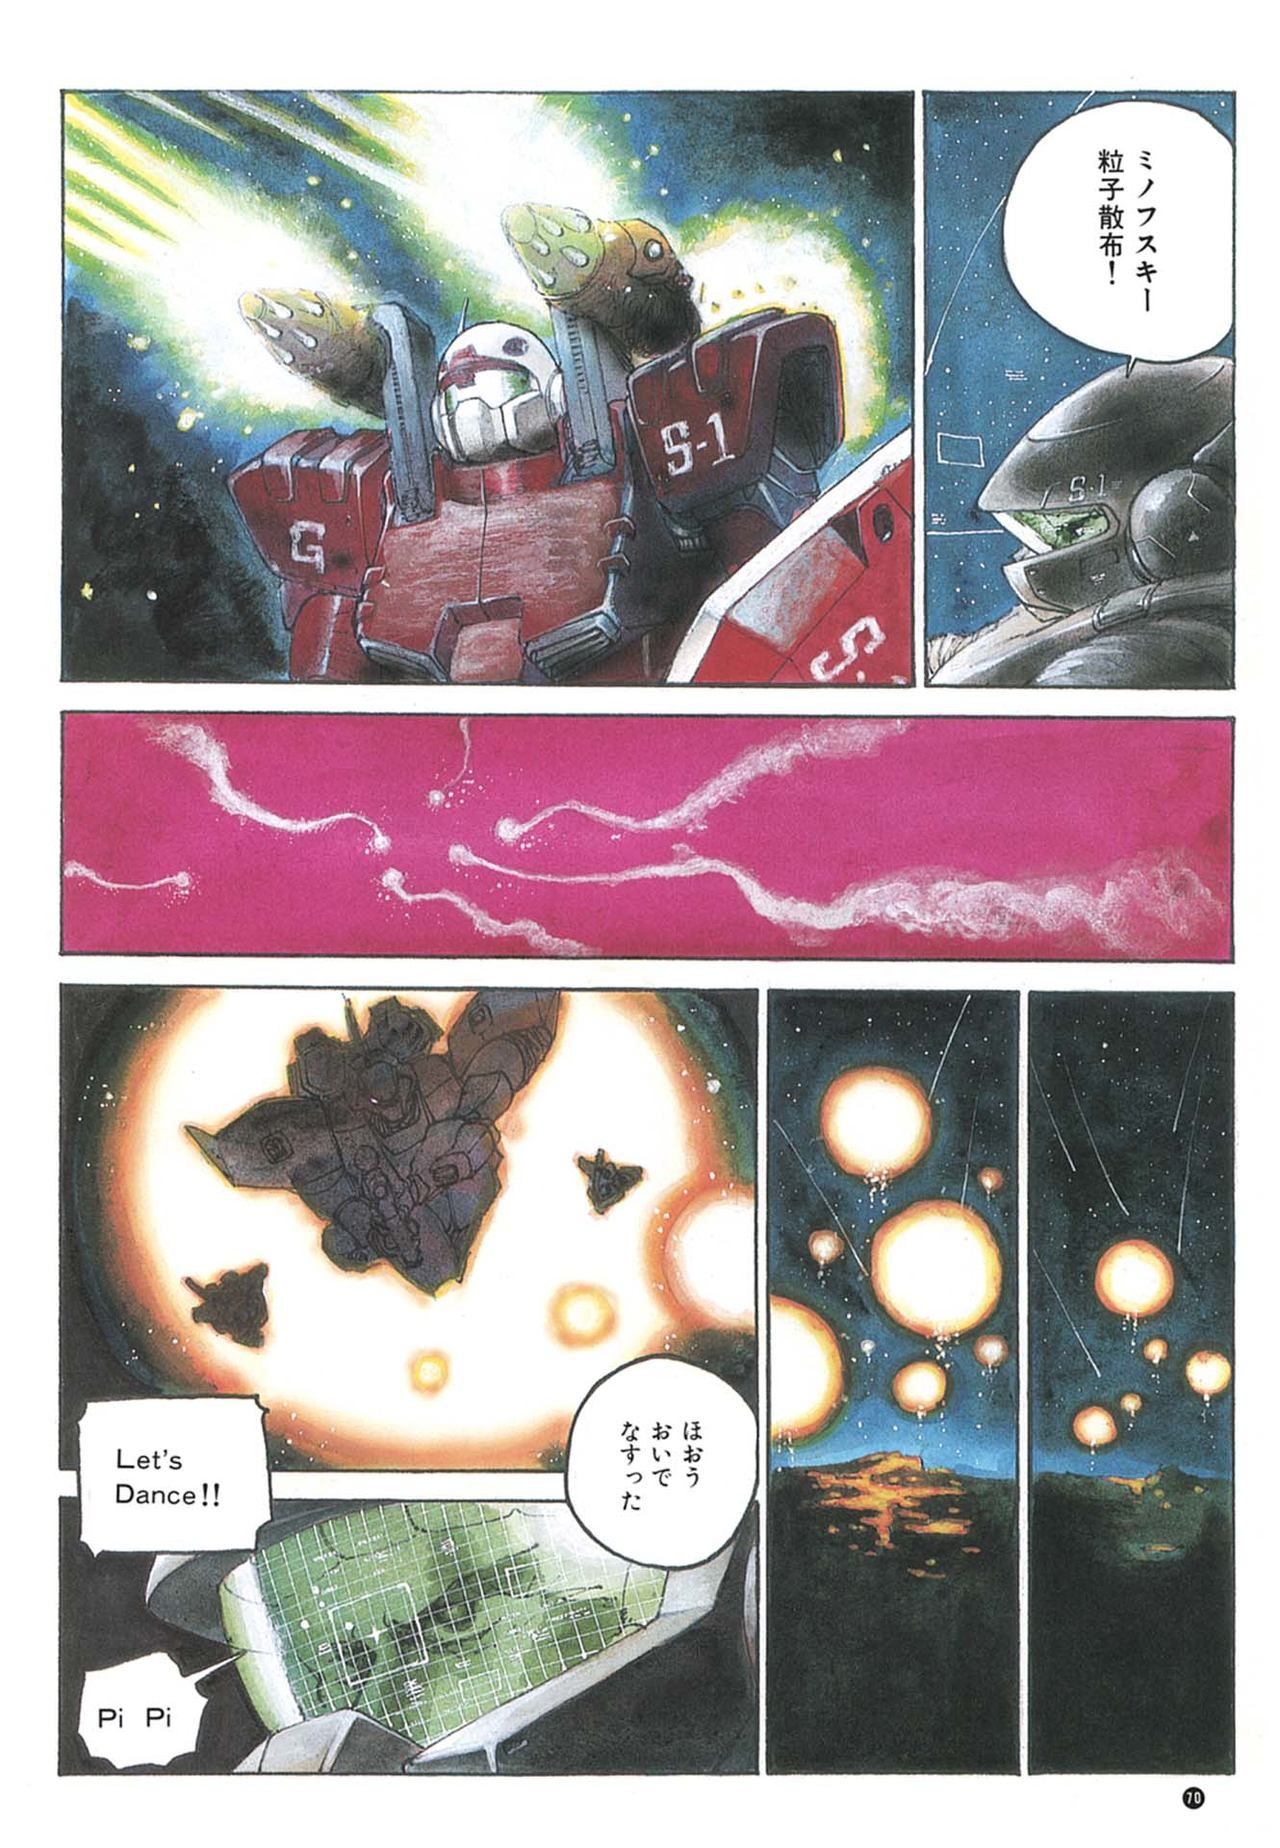 [Kazuhisa Kondo] Kazuhisa Kondo 2D & 3D Works - Go Ahead - From Mobile Suit Gundam to Original Mechanism 69